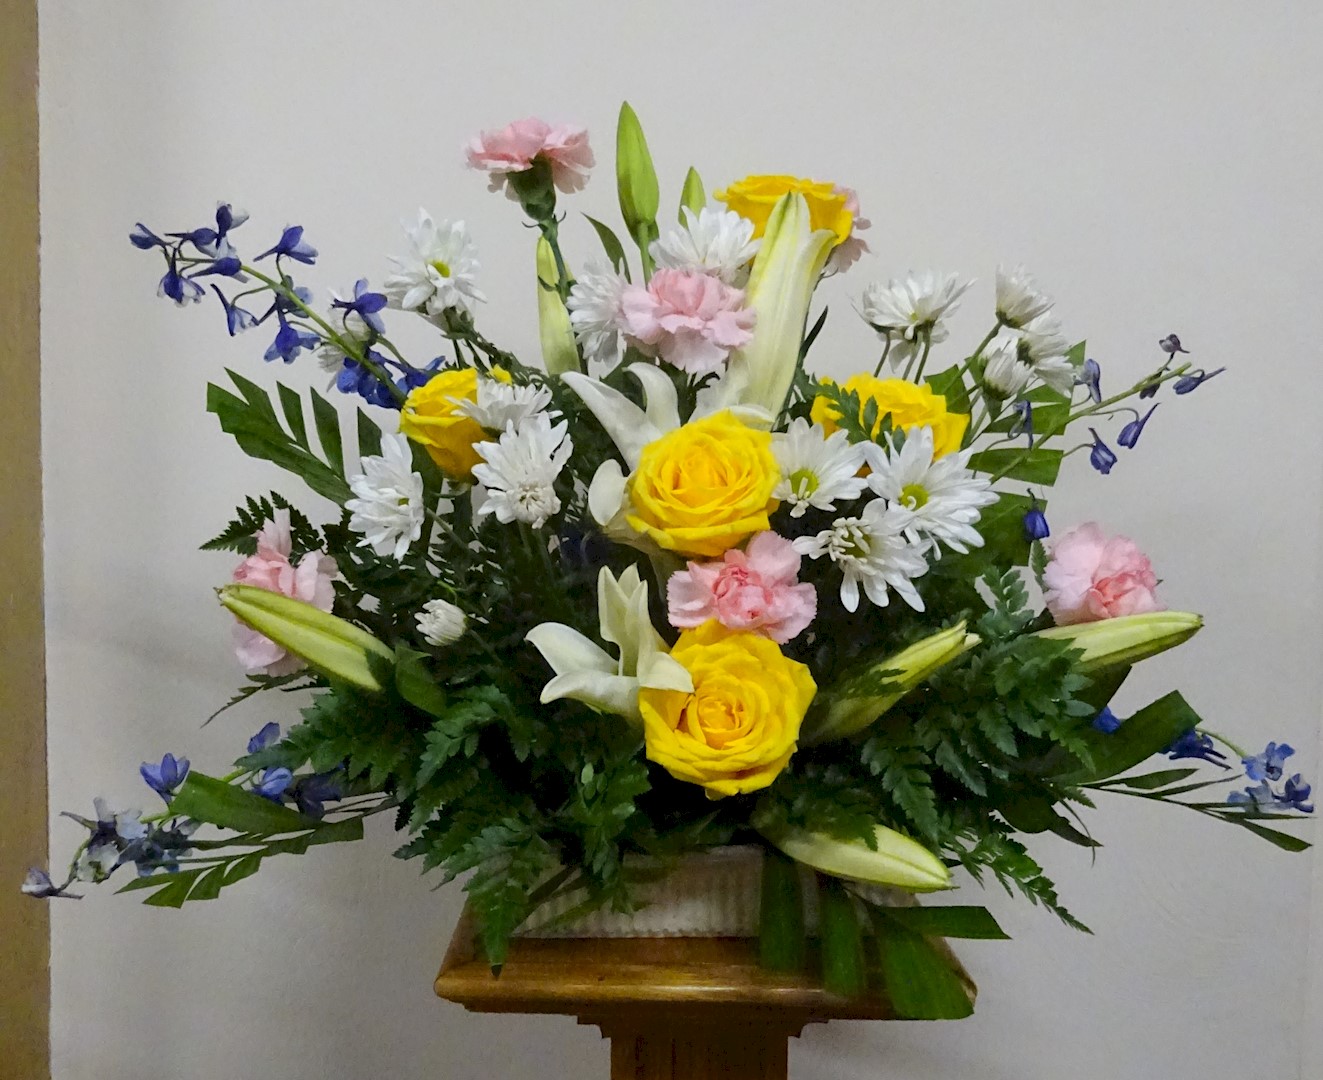 Flowers from Don and Randi, Inga, Kelda, Katie, and Families